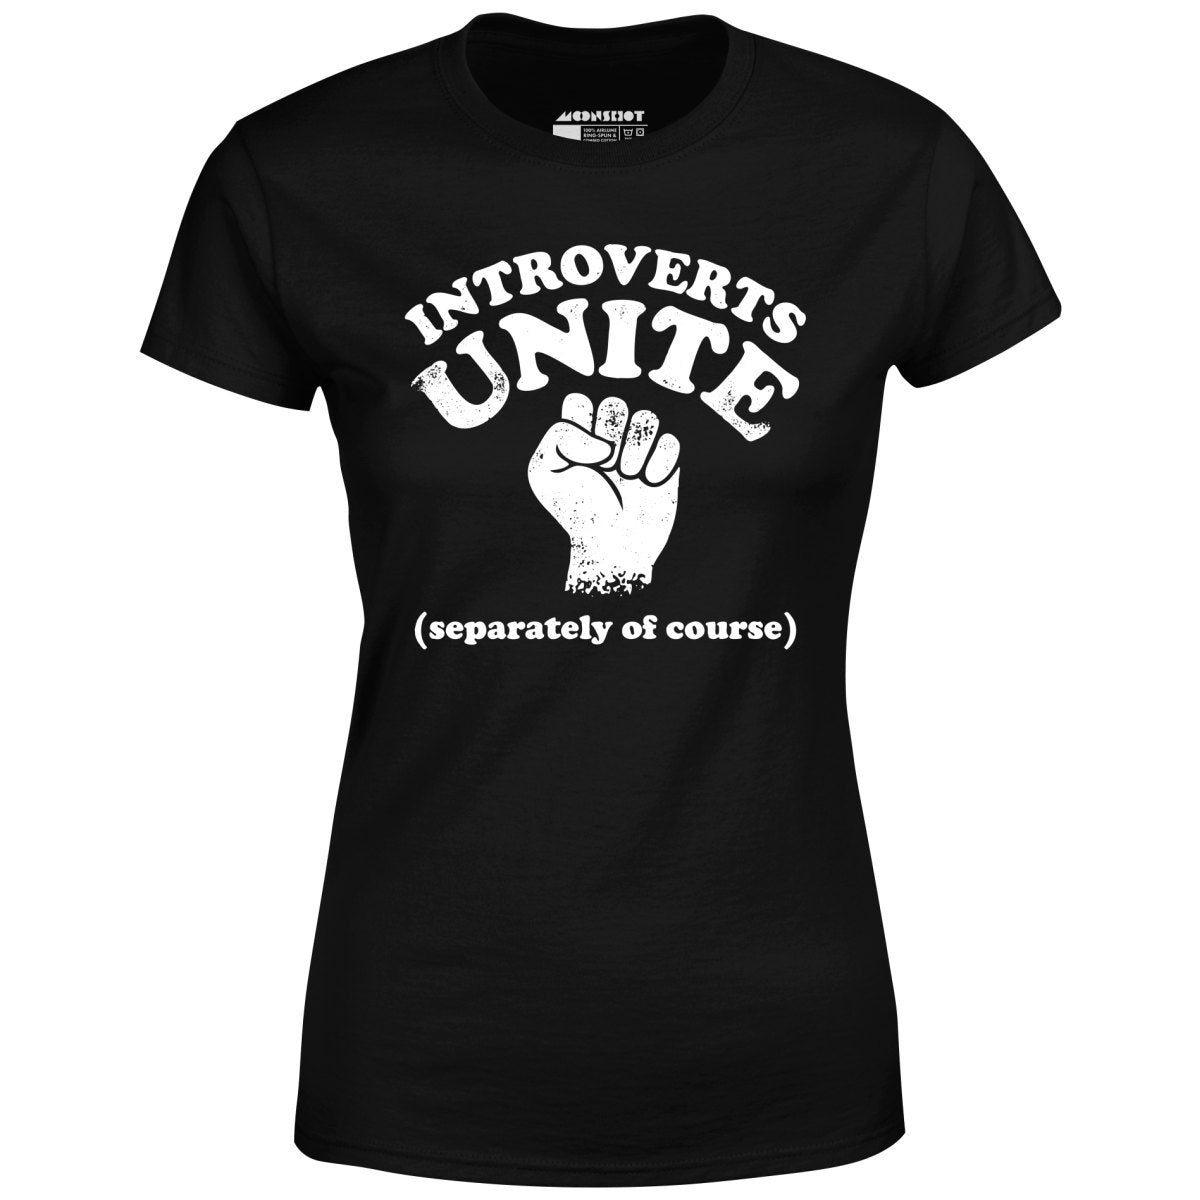 Introverts Unite Women S T Shirt M00nshot